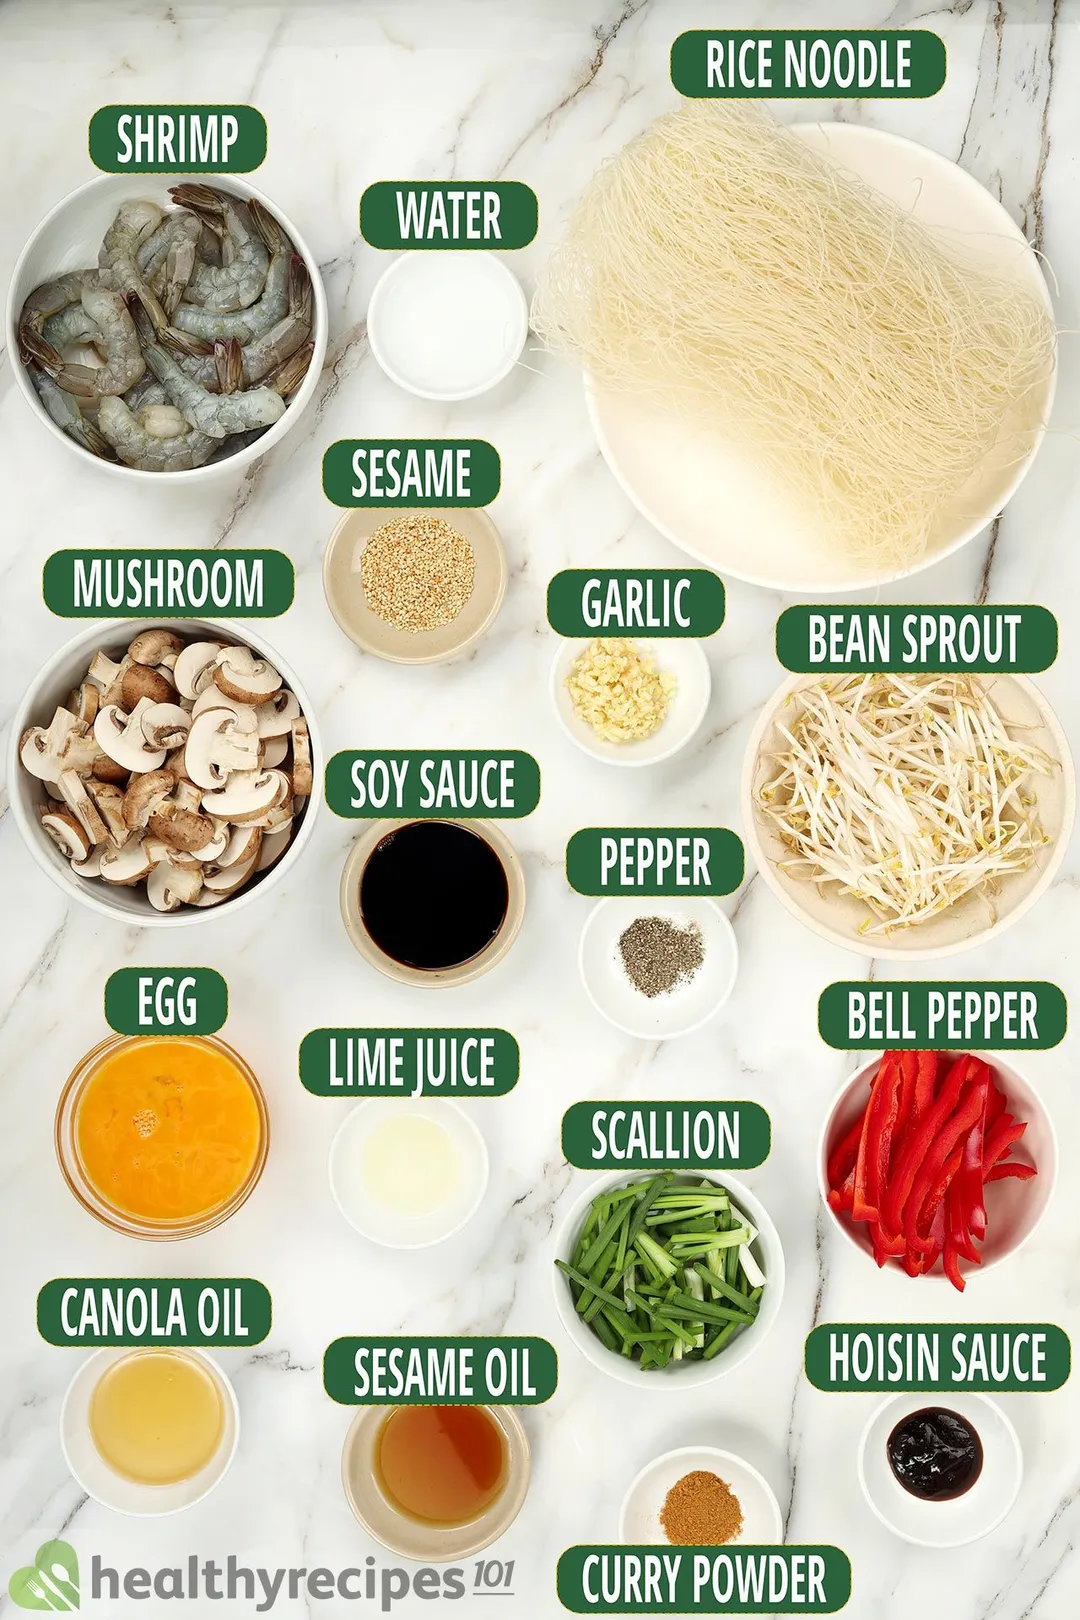 Ingredients for Shrimp Mei Fun